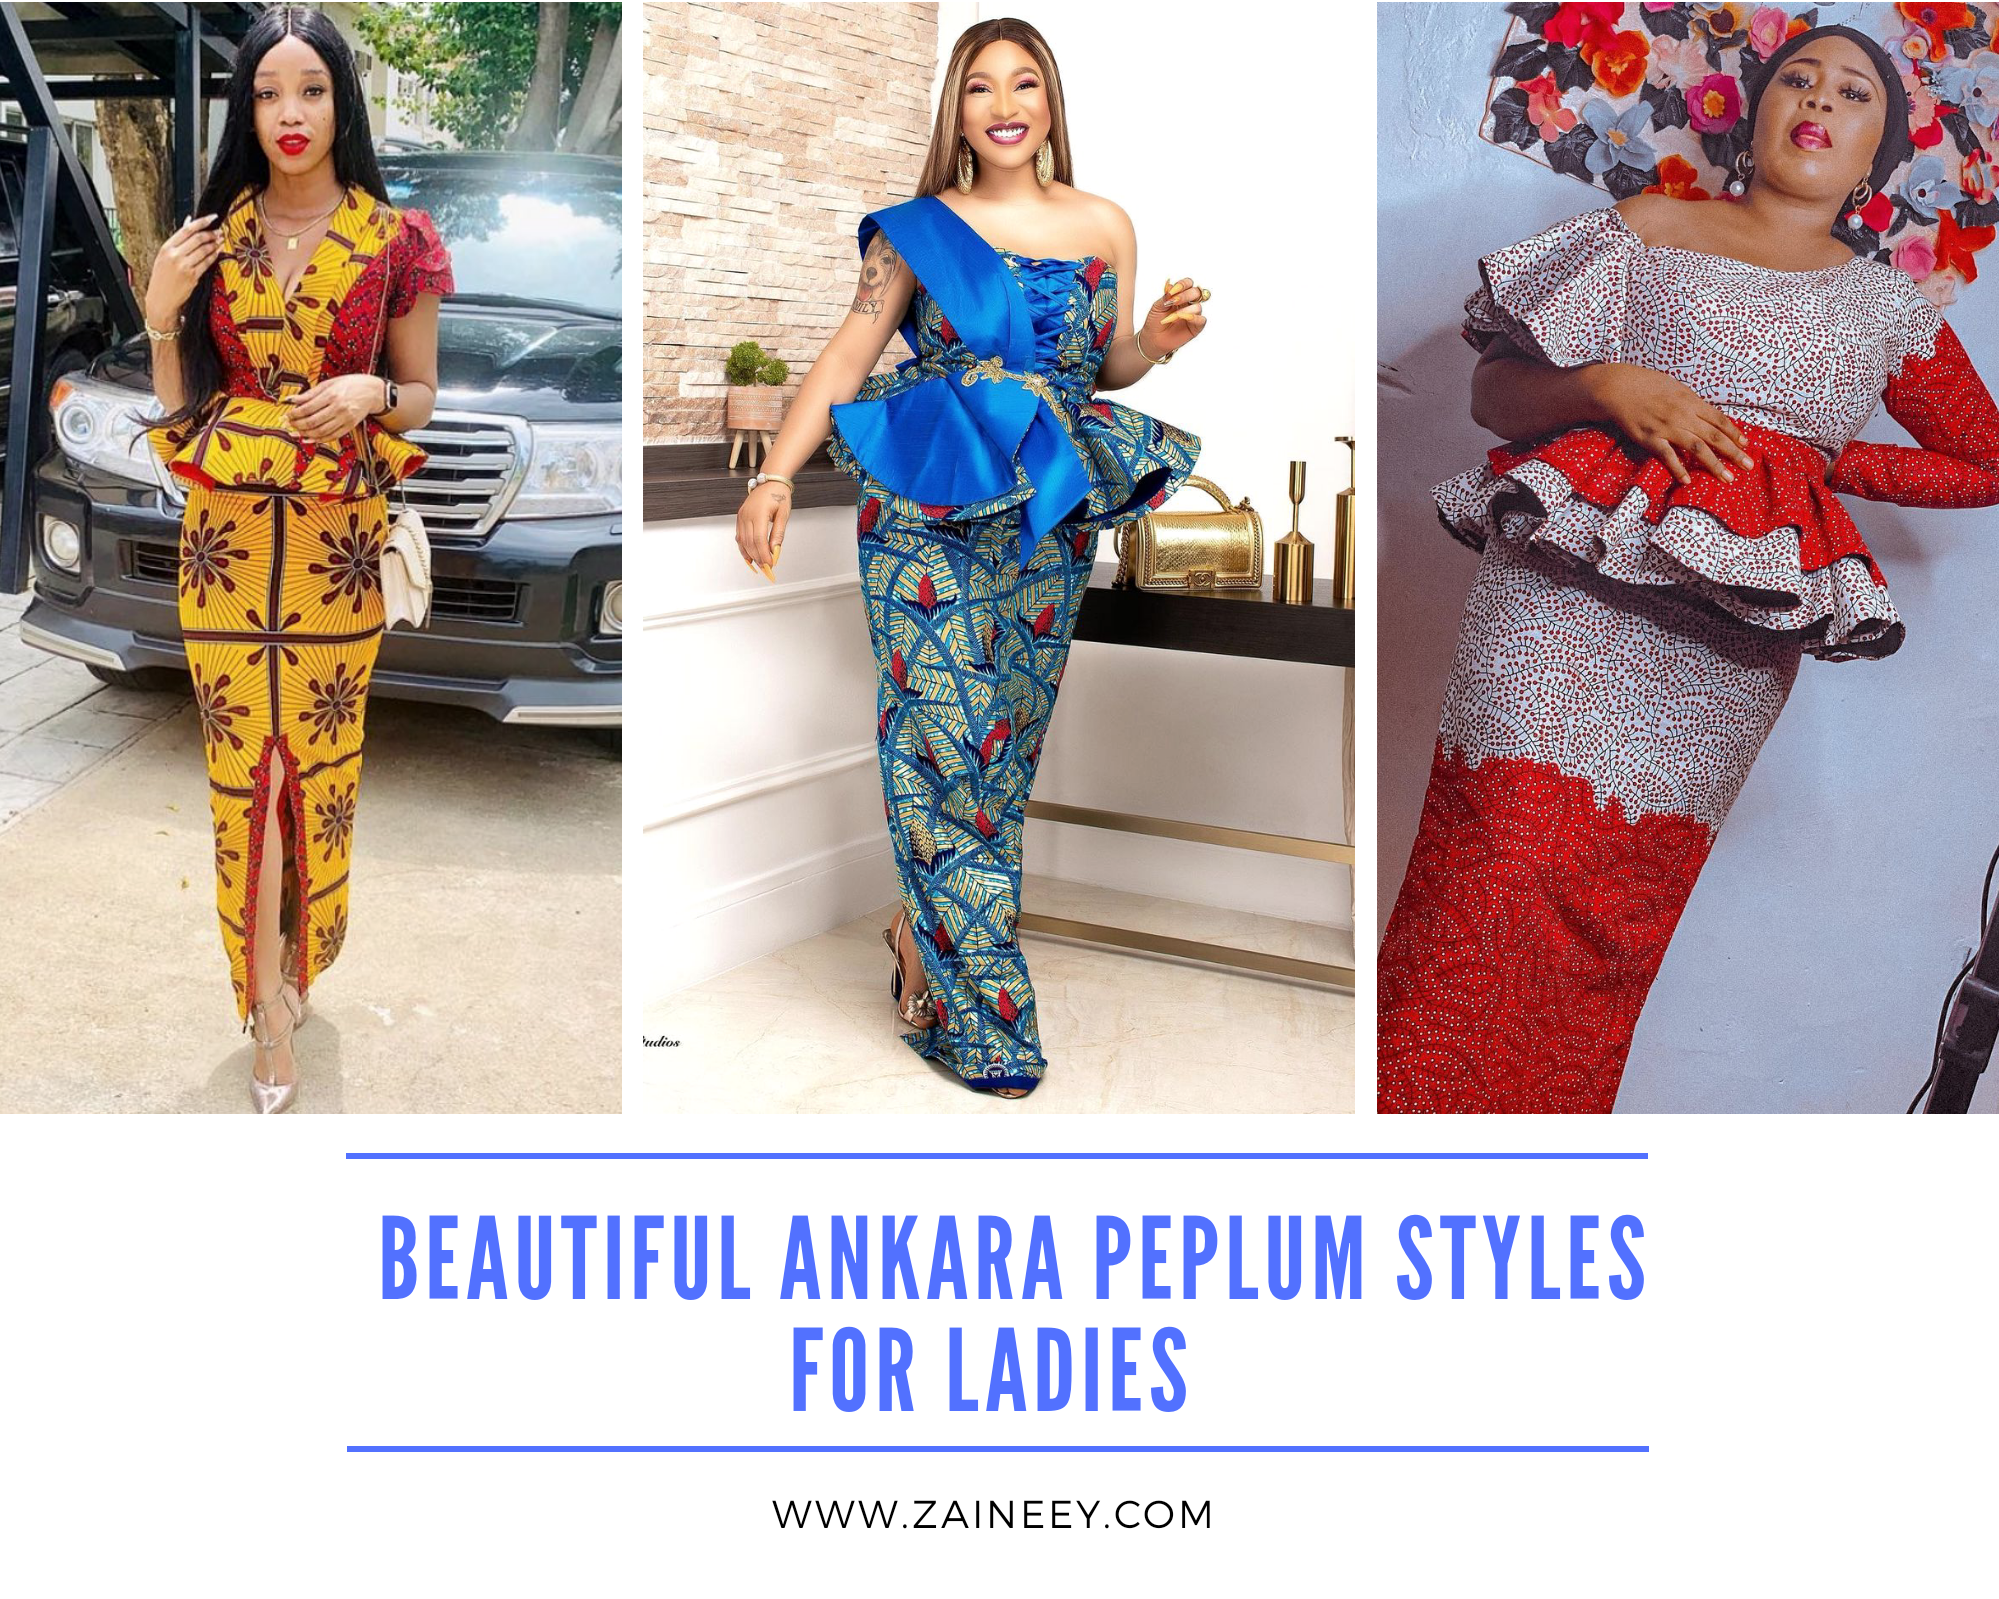 Ankara Peplum Styles for Ladies 2021